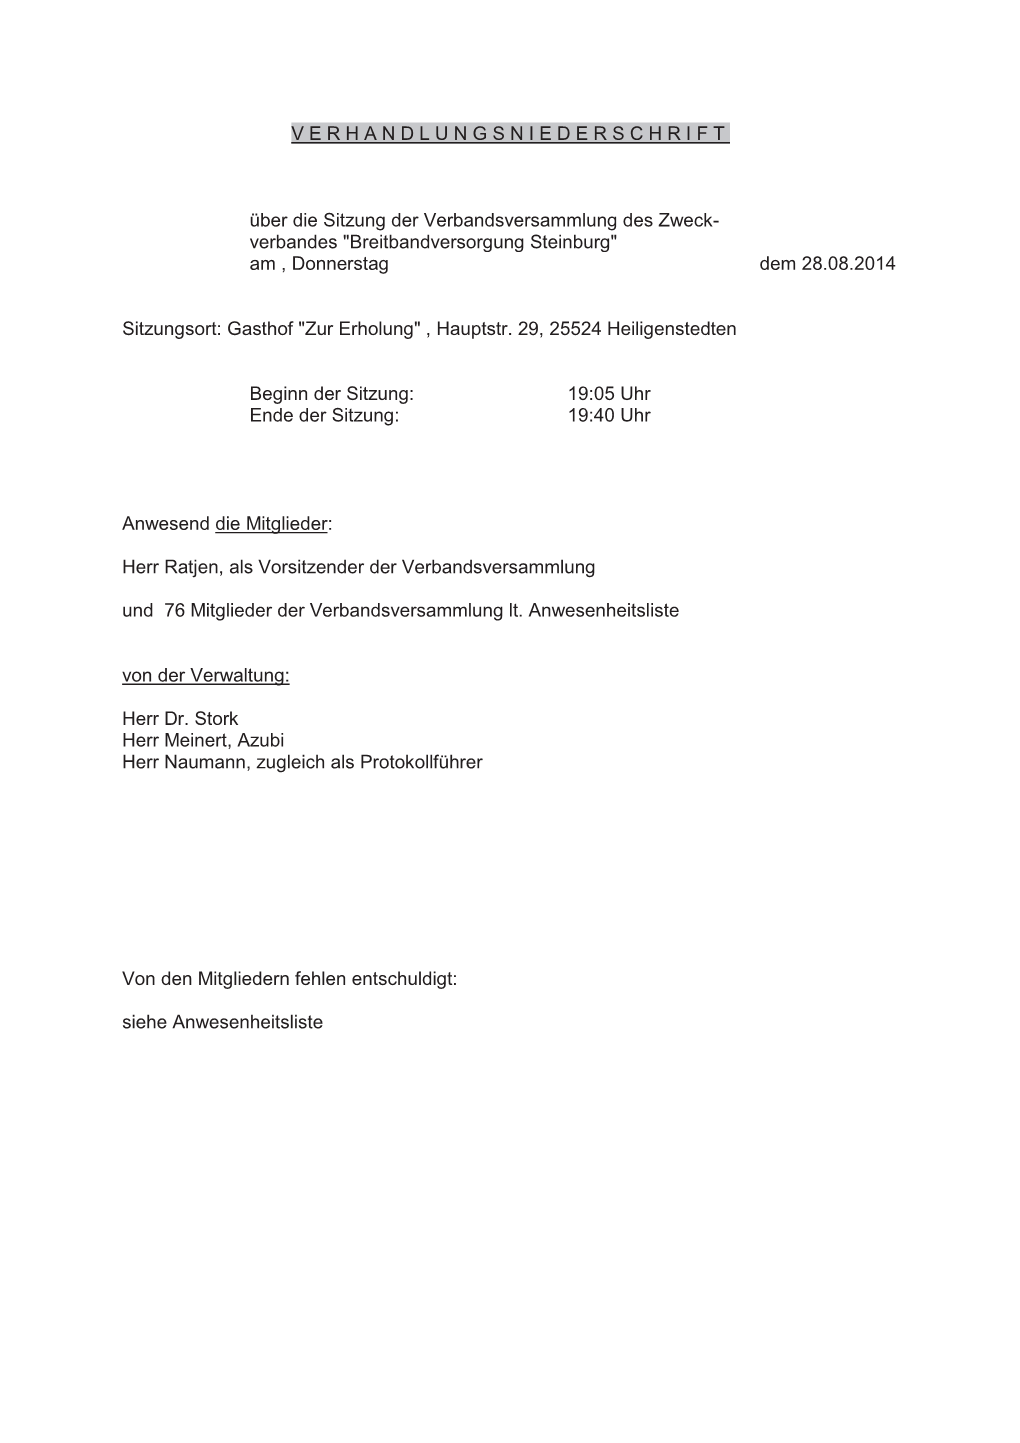 VV Protokoll 28.08.2014.Pdf